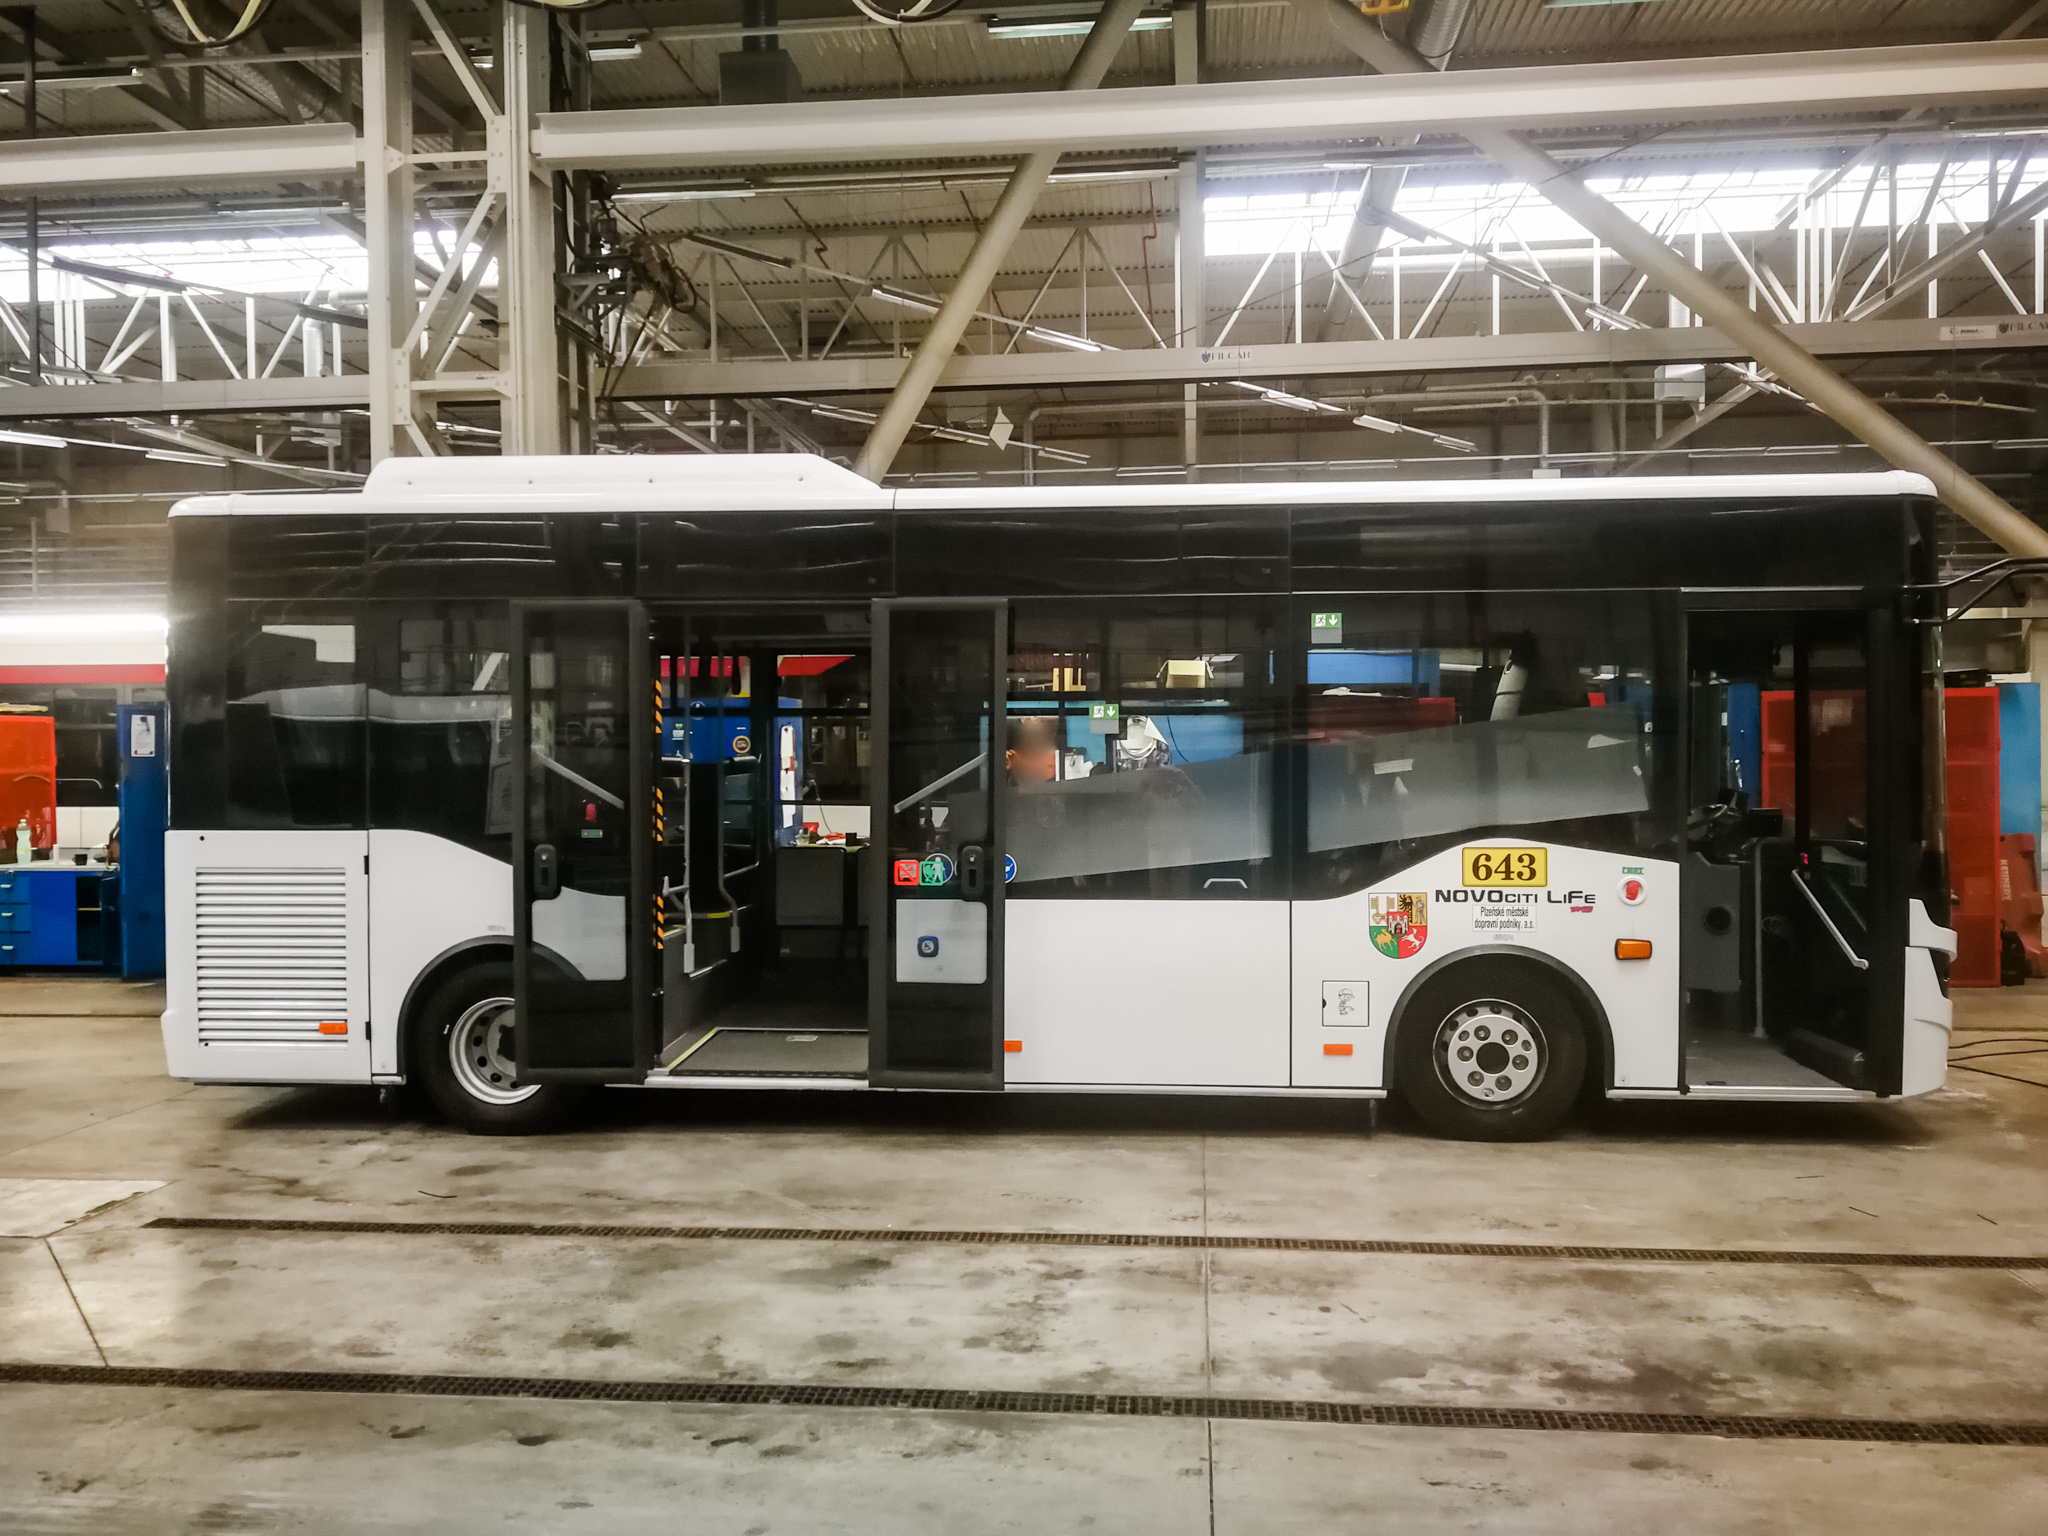 Autobus Isuzu Novociti Life v Plzni. Foto: PMDP